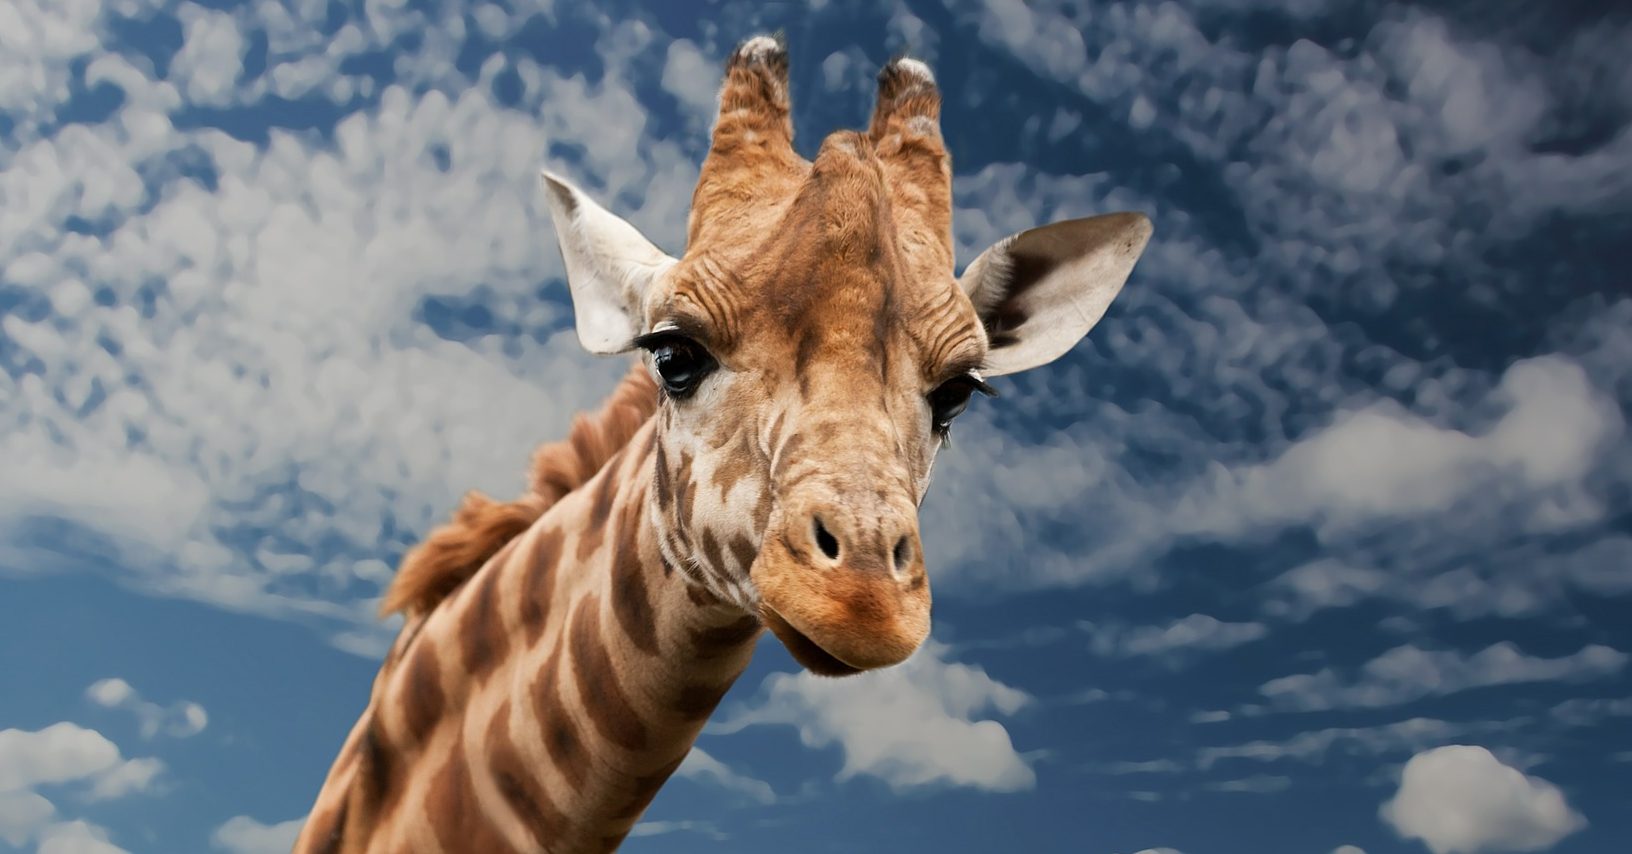 Giraffe, a species in danger of extinction